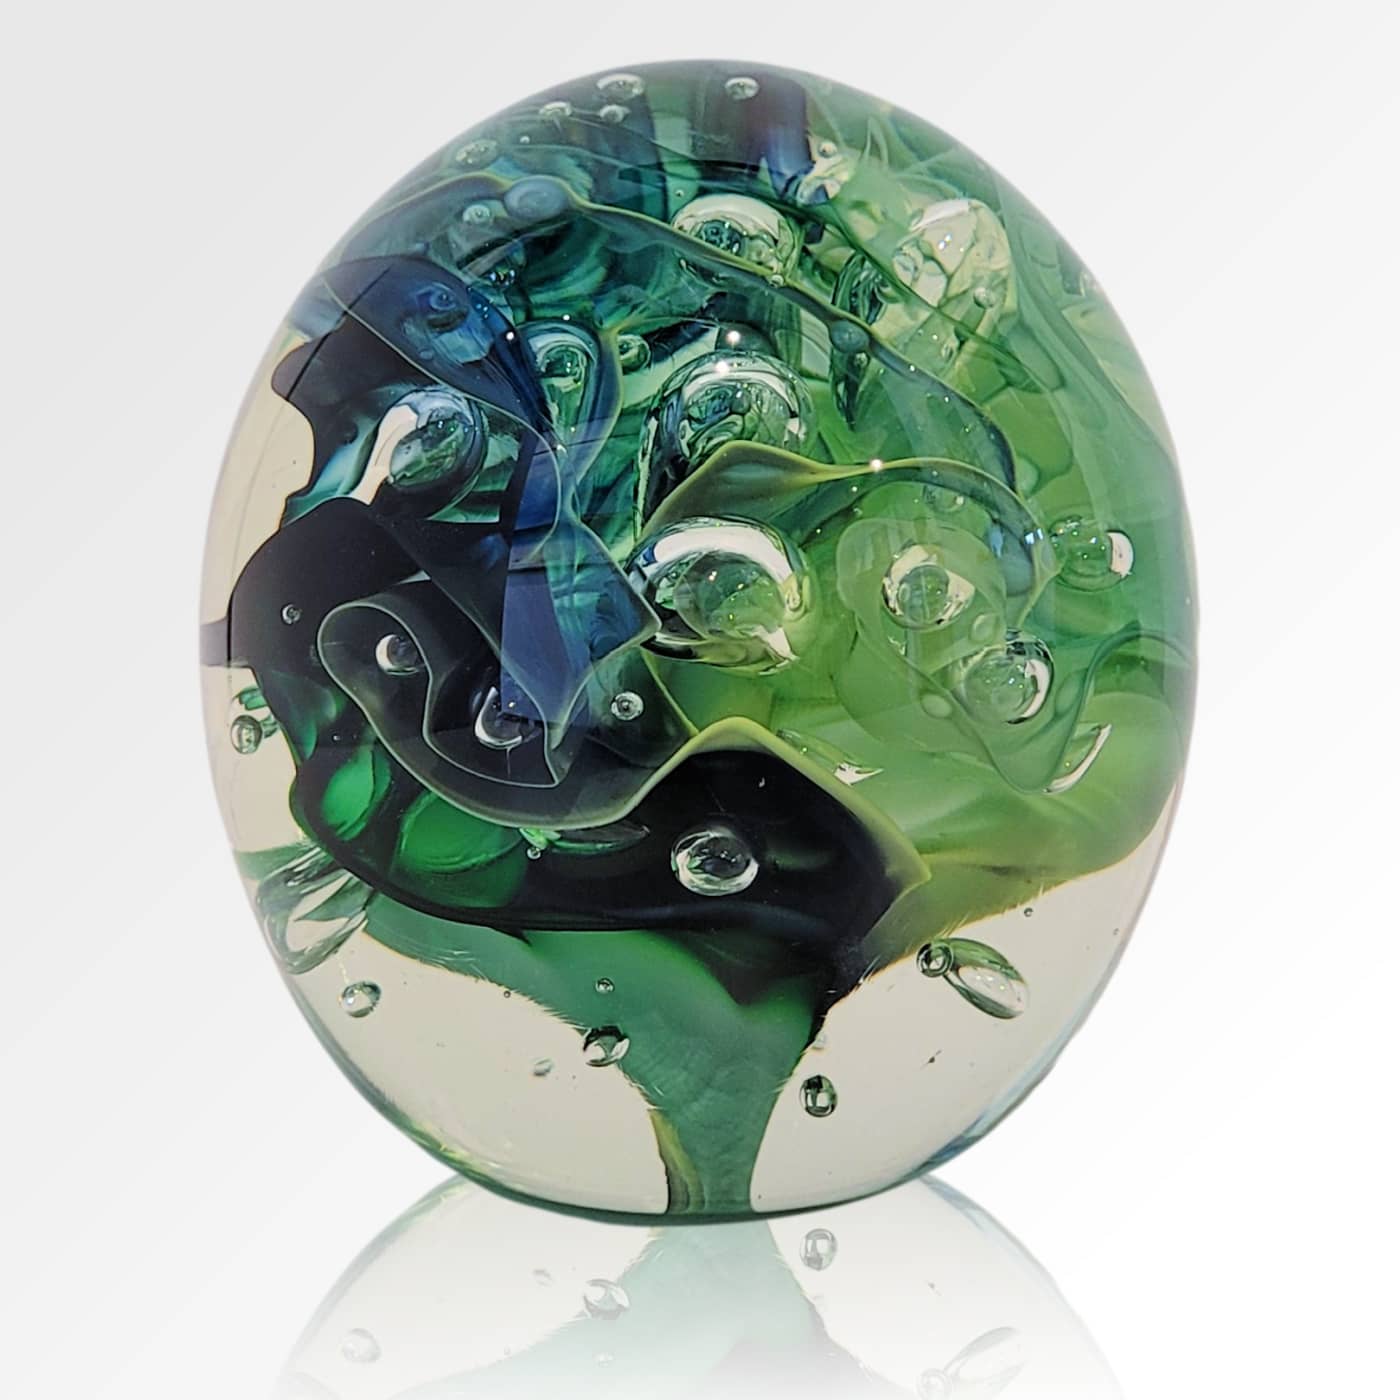 Peninsula-Based Australian Glass Artist Roberta Easton ~ 'Bubbly Sphere, Spring' - Curate Art & Design Gallery Sorrento Mornington Peninsula Melbourne